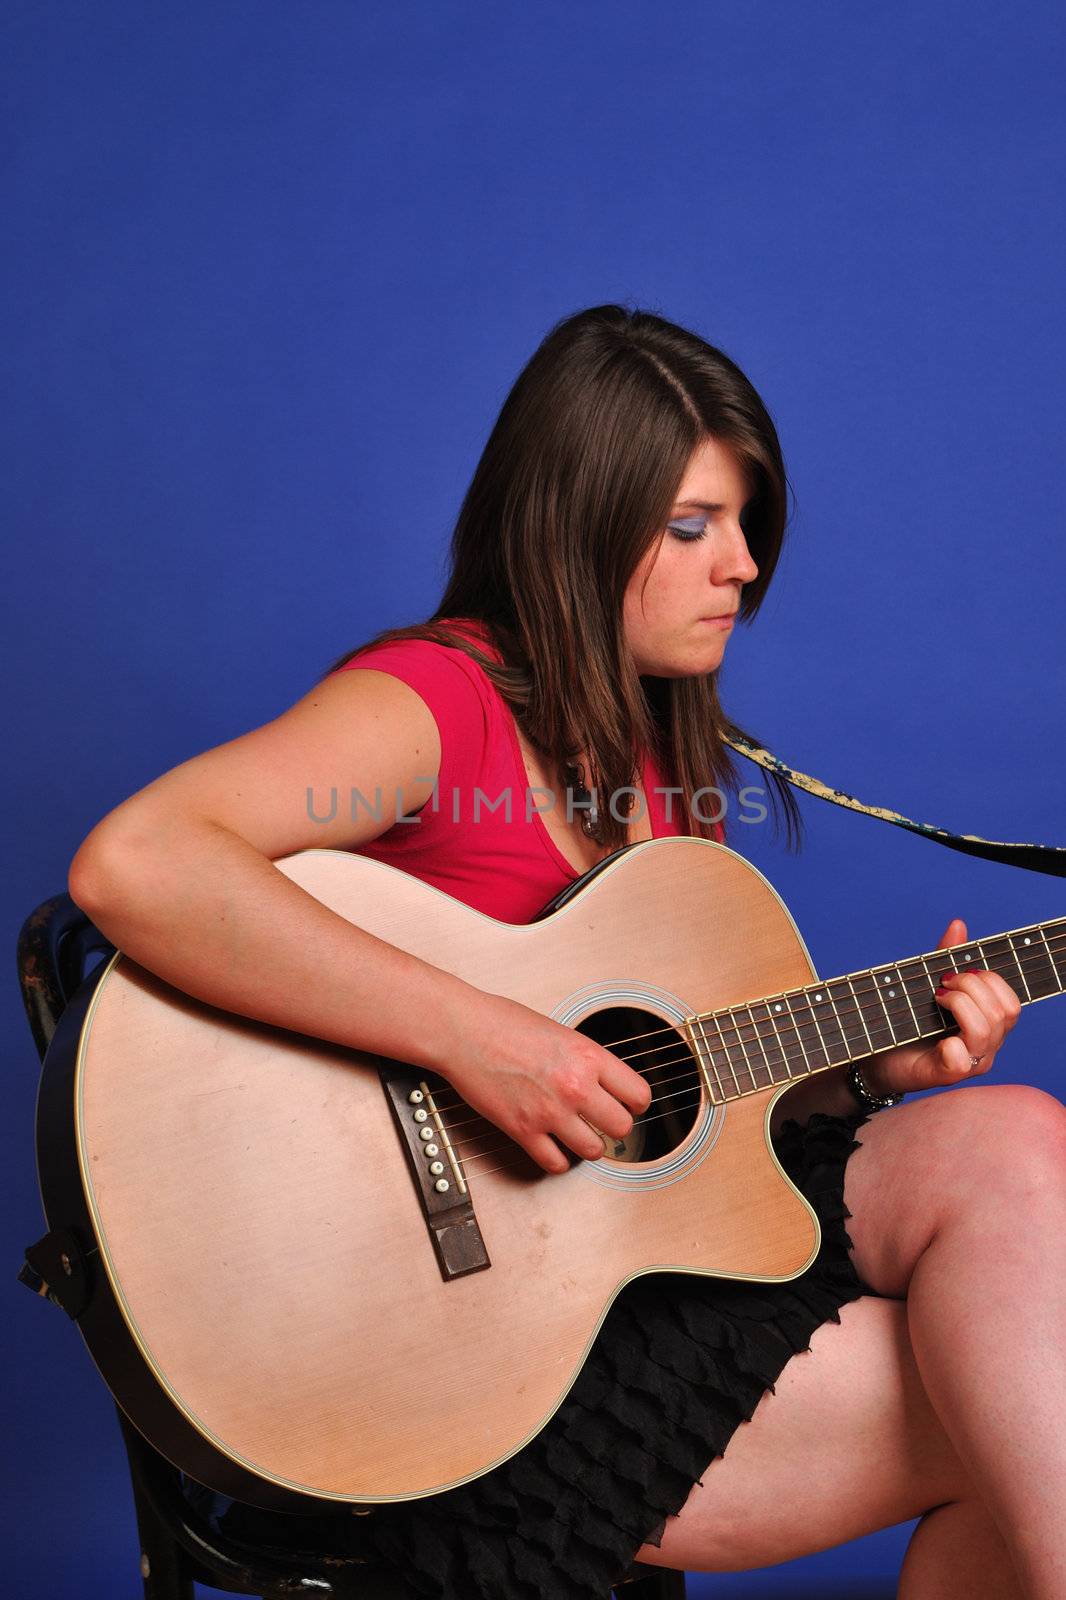 pretty girl in skirt sitting playing guitar